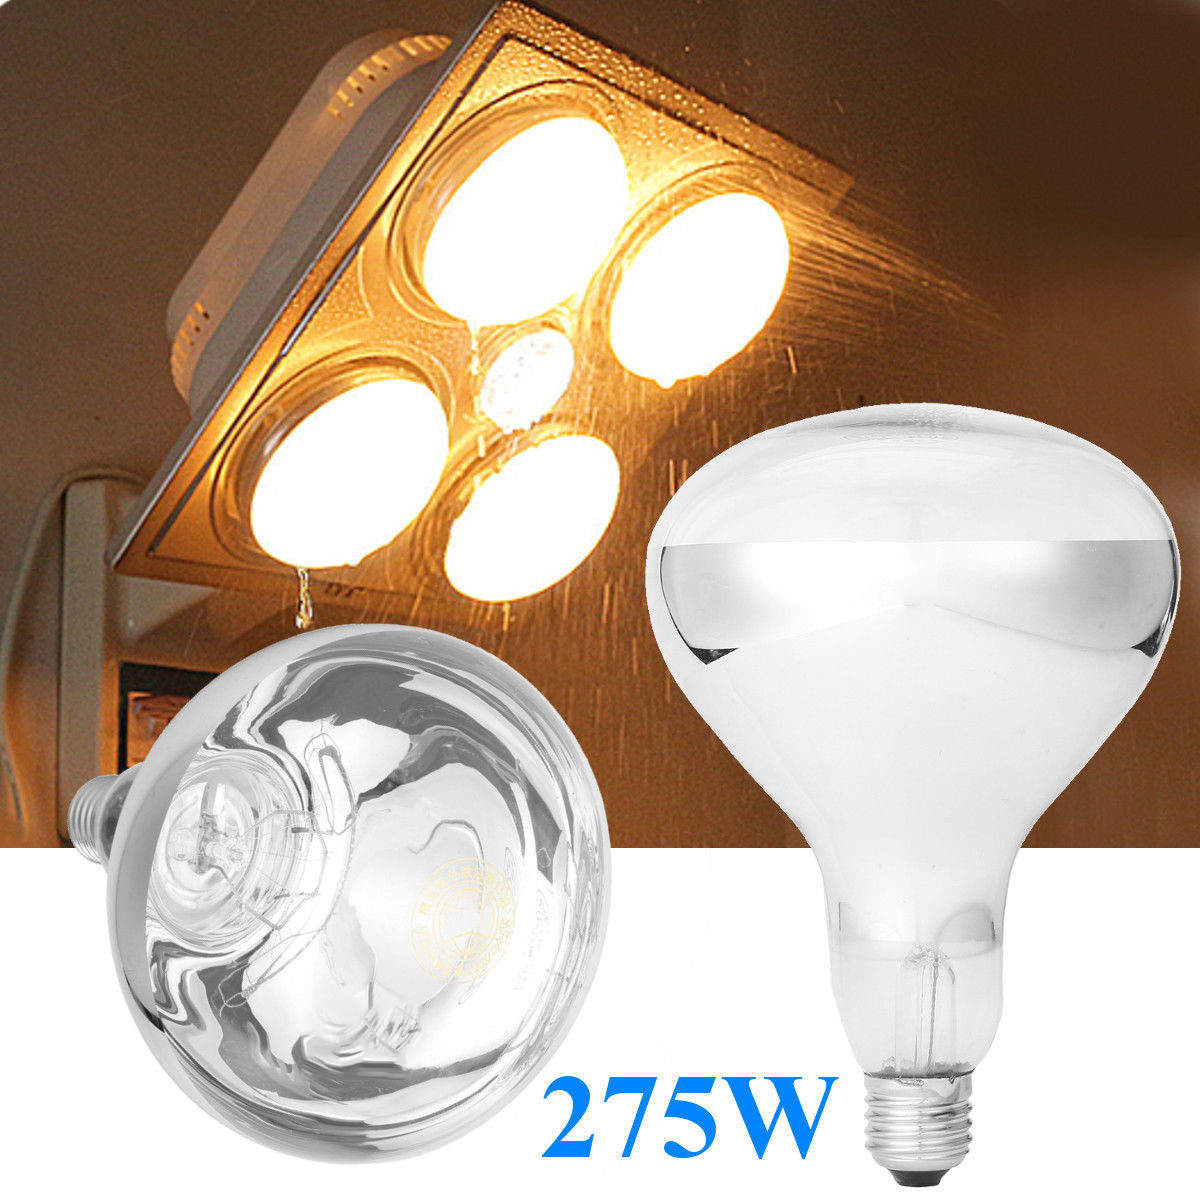 Heating Light Bulbs For Bathroom
 E27 275W Infrared Heat Lamp Light Bulb For Ceiling Exhaust